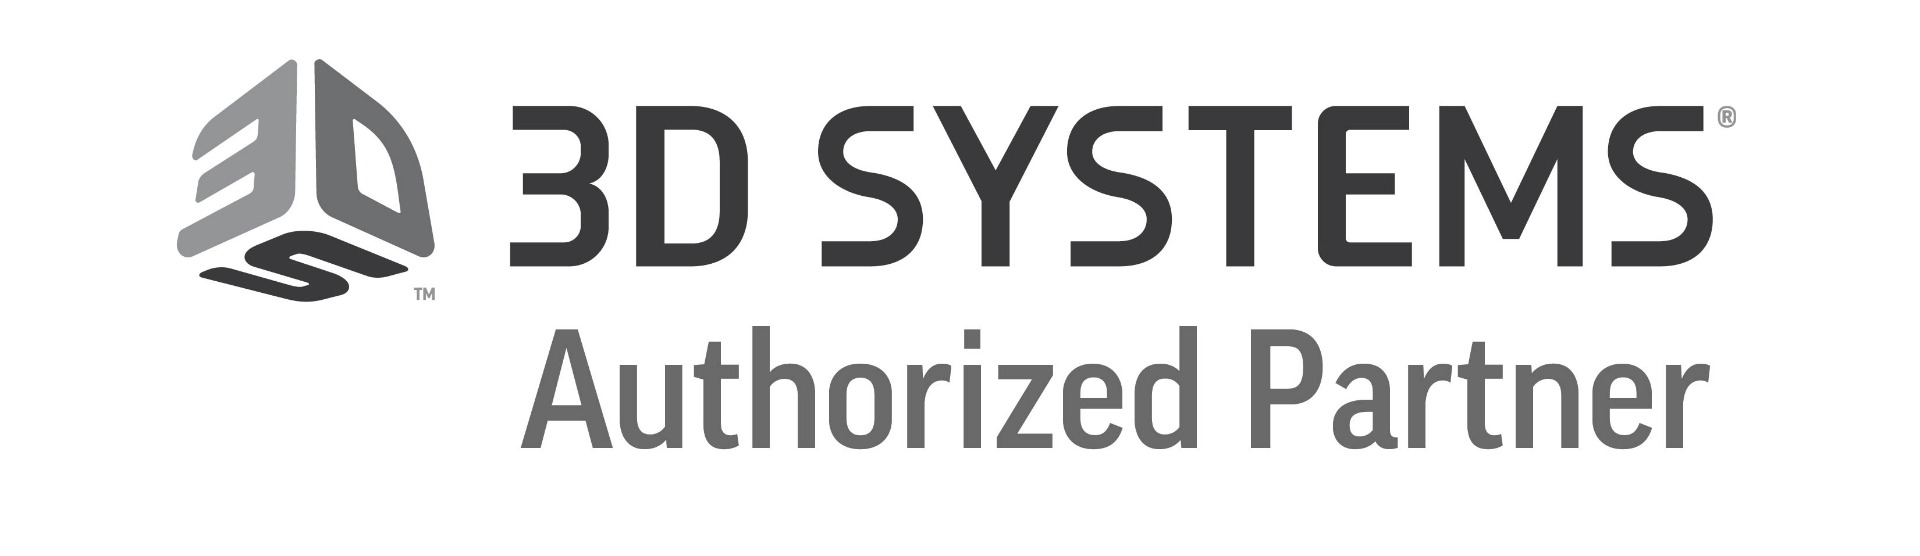 JPG_Partner_Logo_Light_-_3D_Systems